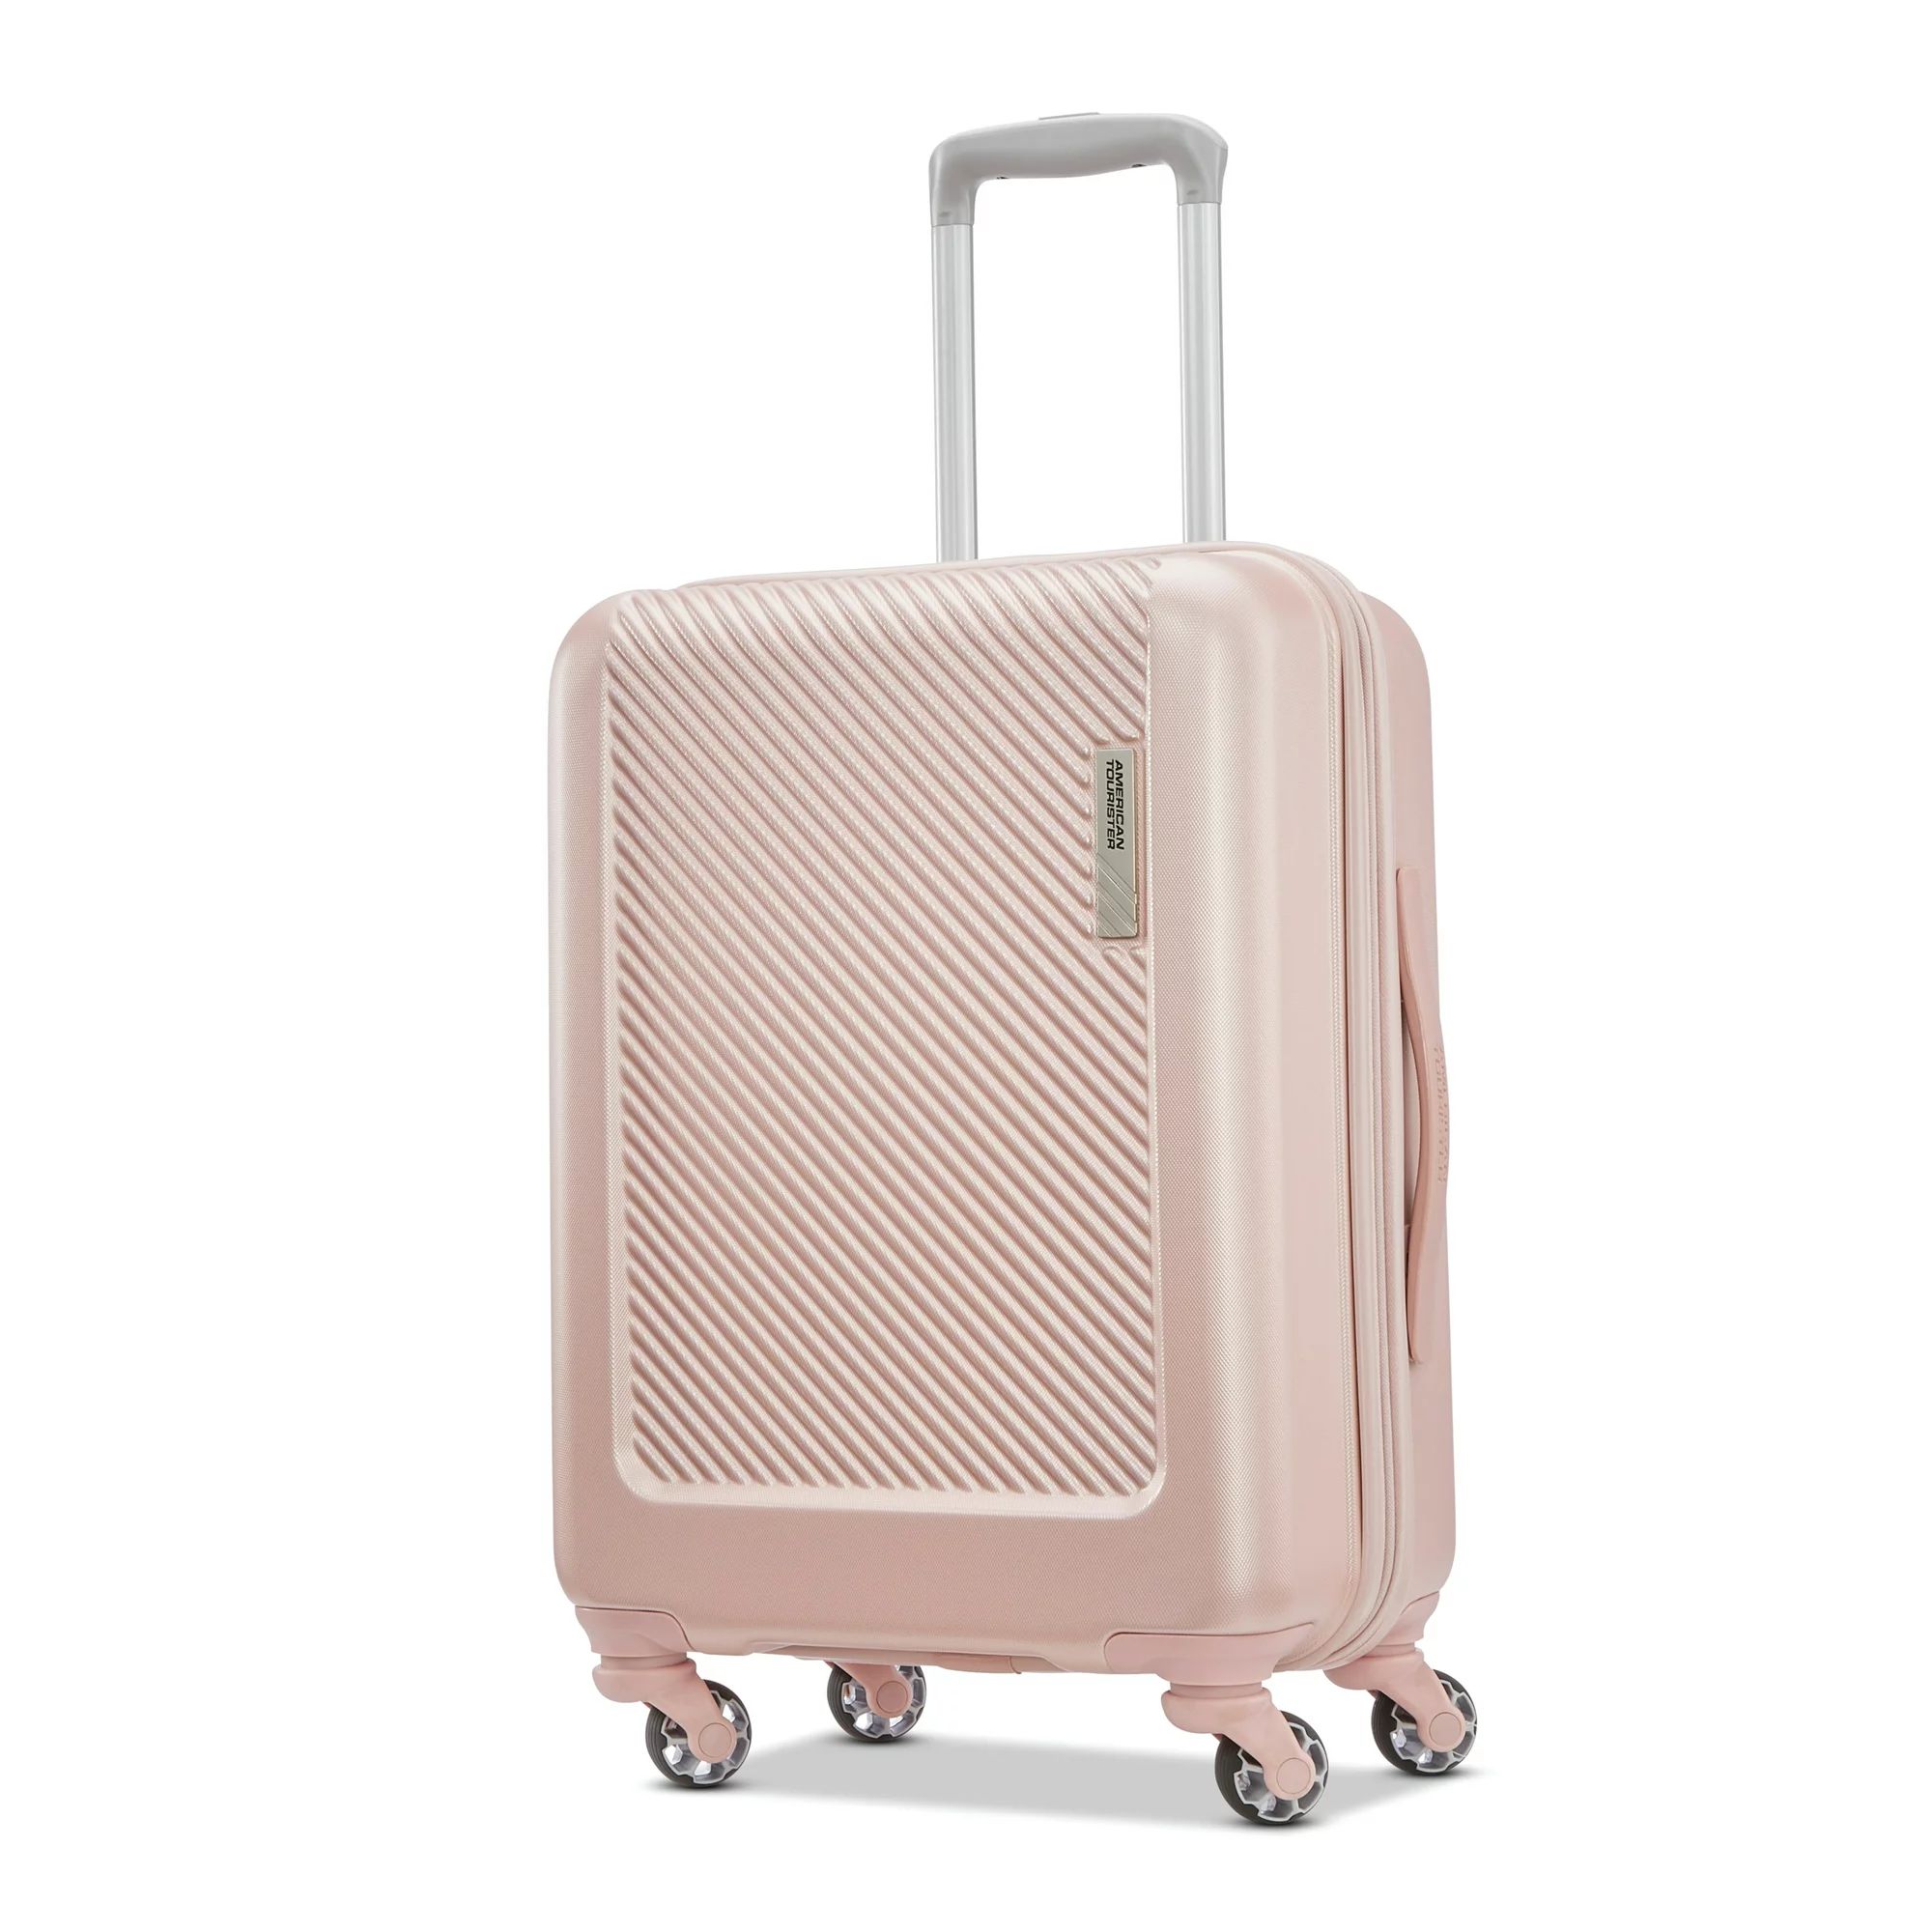 American Tourister Ikon 20" Hardside Spinner Luggage, Pink | Walmart (US)